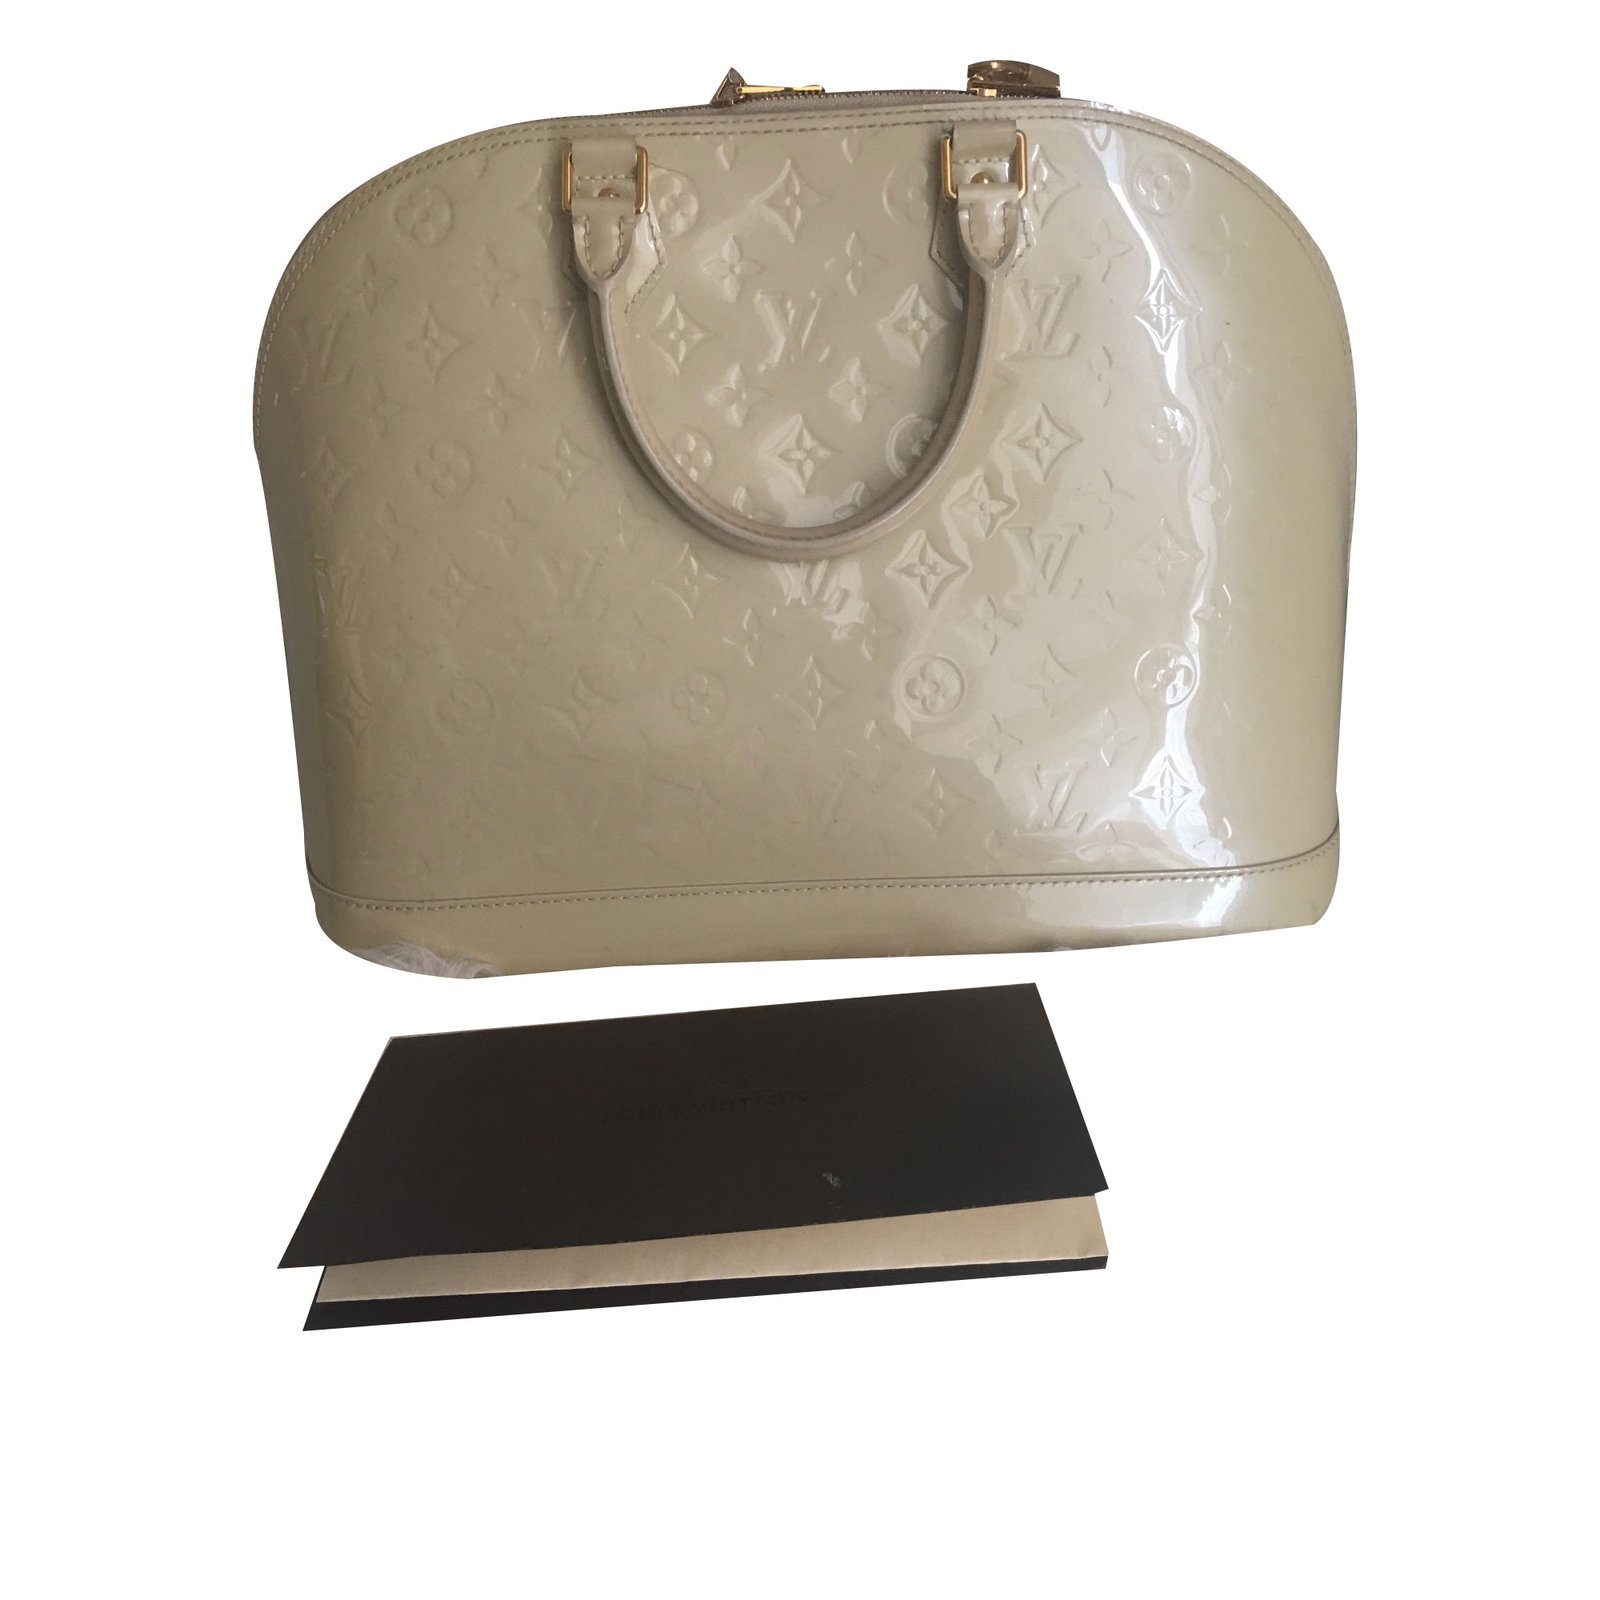 louis vuitton white patent leather handbag